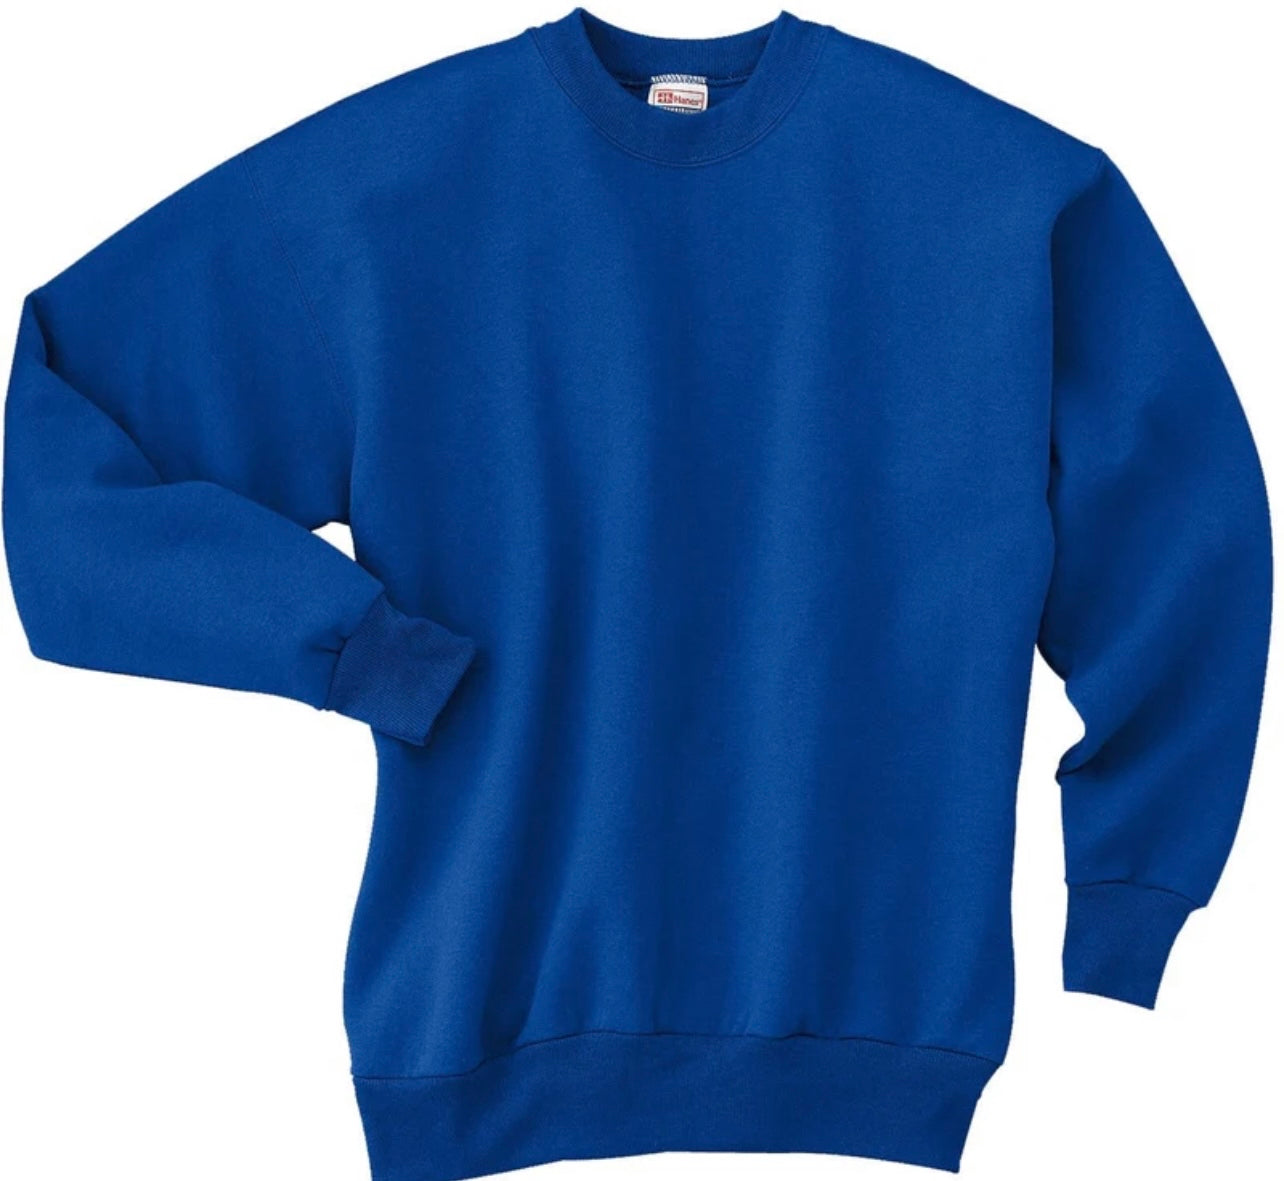 Lakewood Lancers Crewneck Sweatshirt